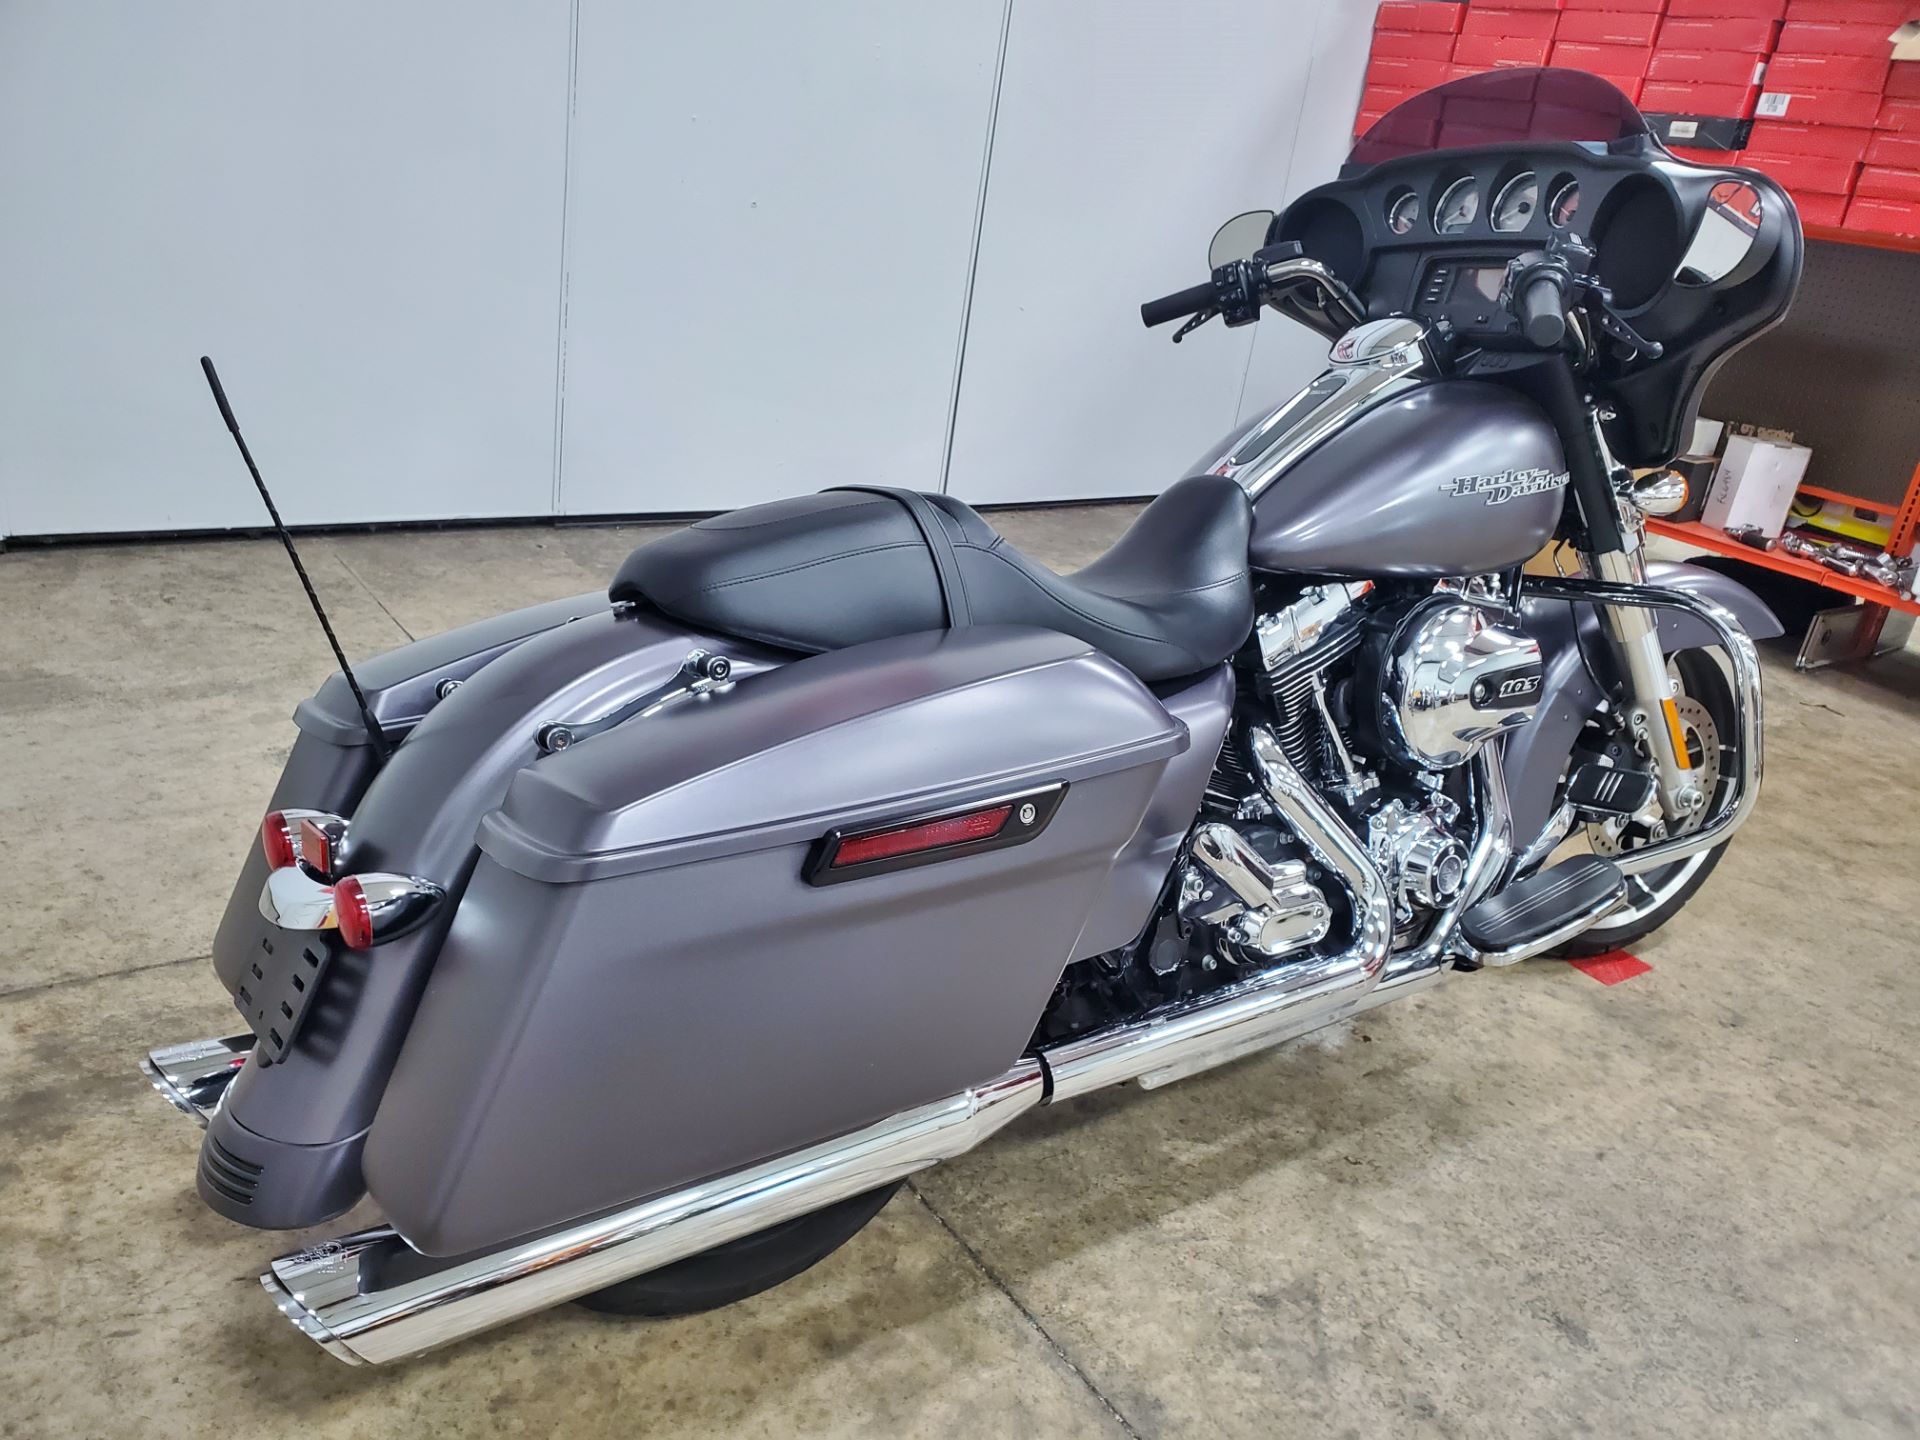 2015 Harley-Davidson Street Glide® Special in Sandusky, Ohio - Photo 9